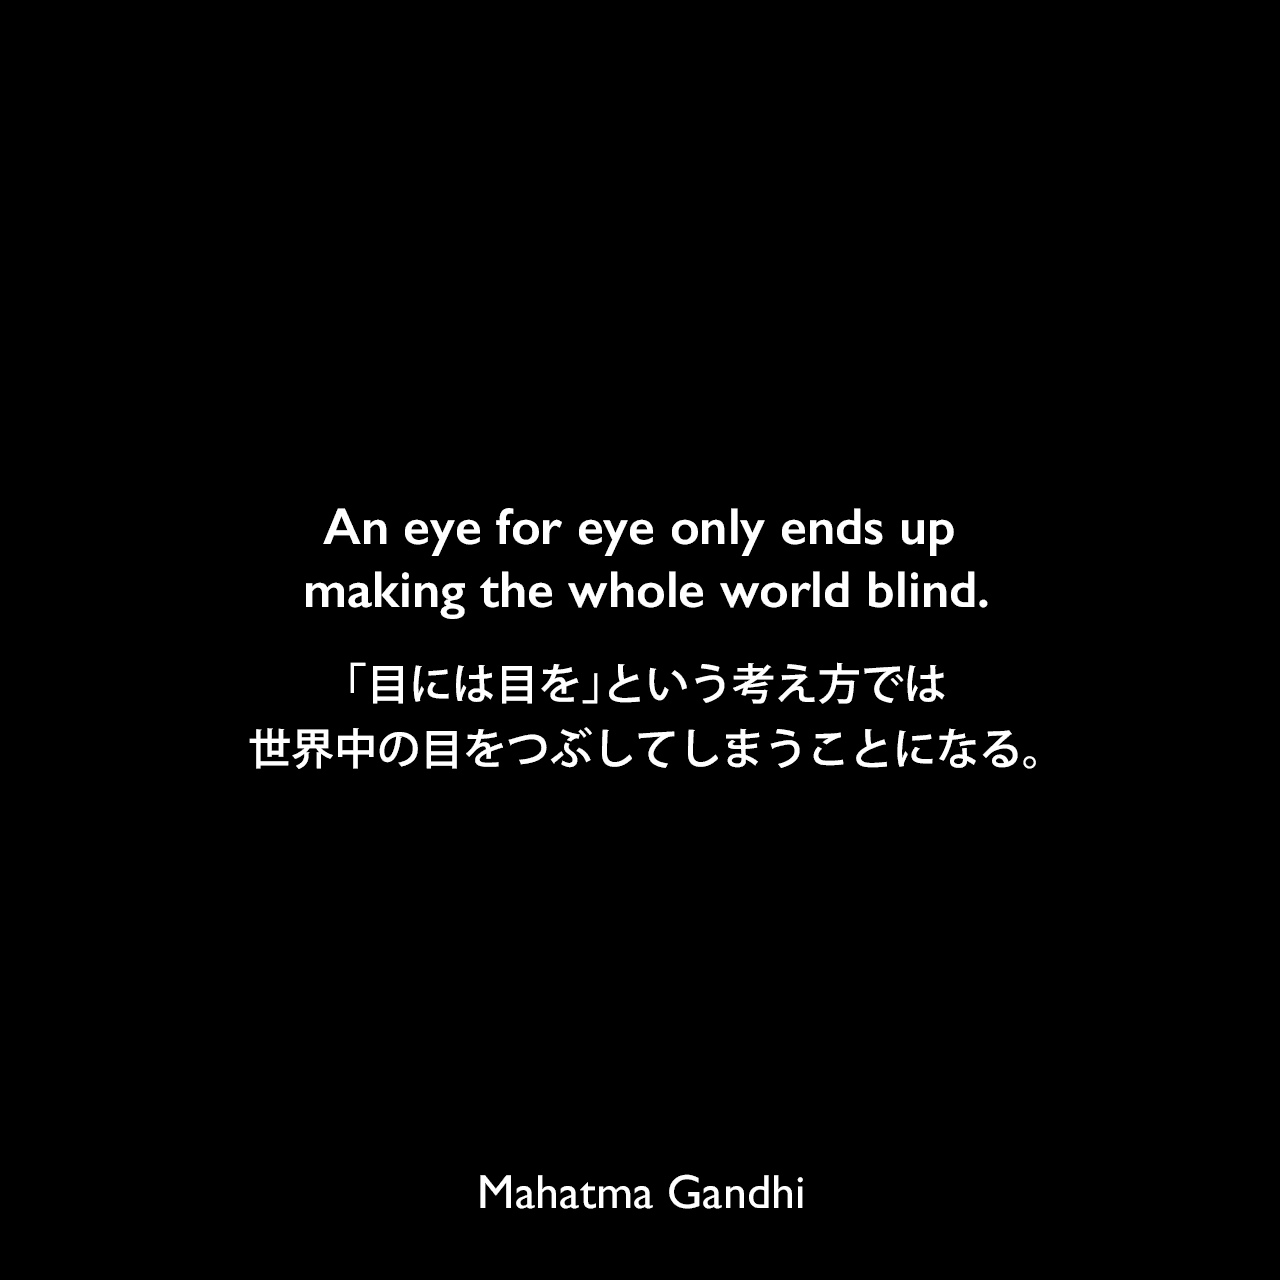 An eye for eye only ends up making the whole world blind.「目には目を」という考え方では、世界中の目をつぶしてしまうことになる。Mahatma Gandhi